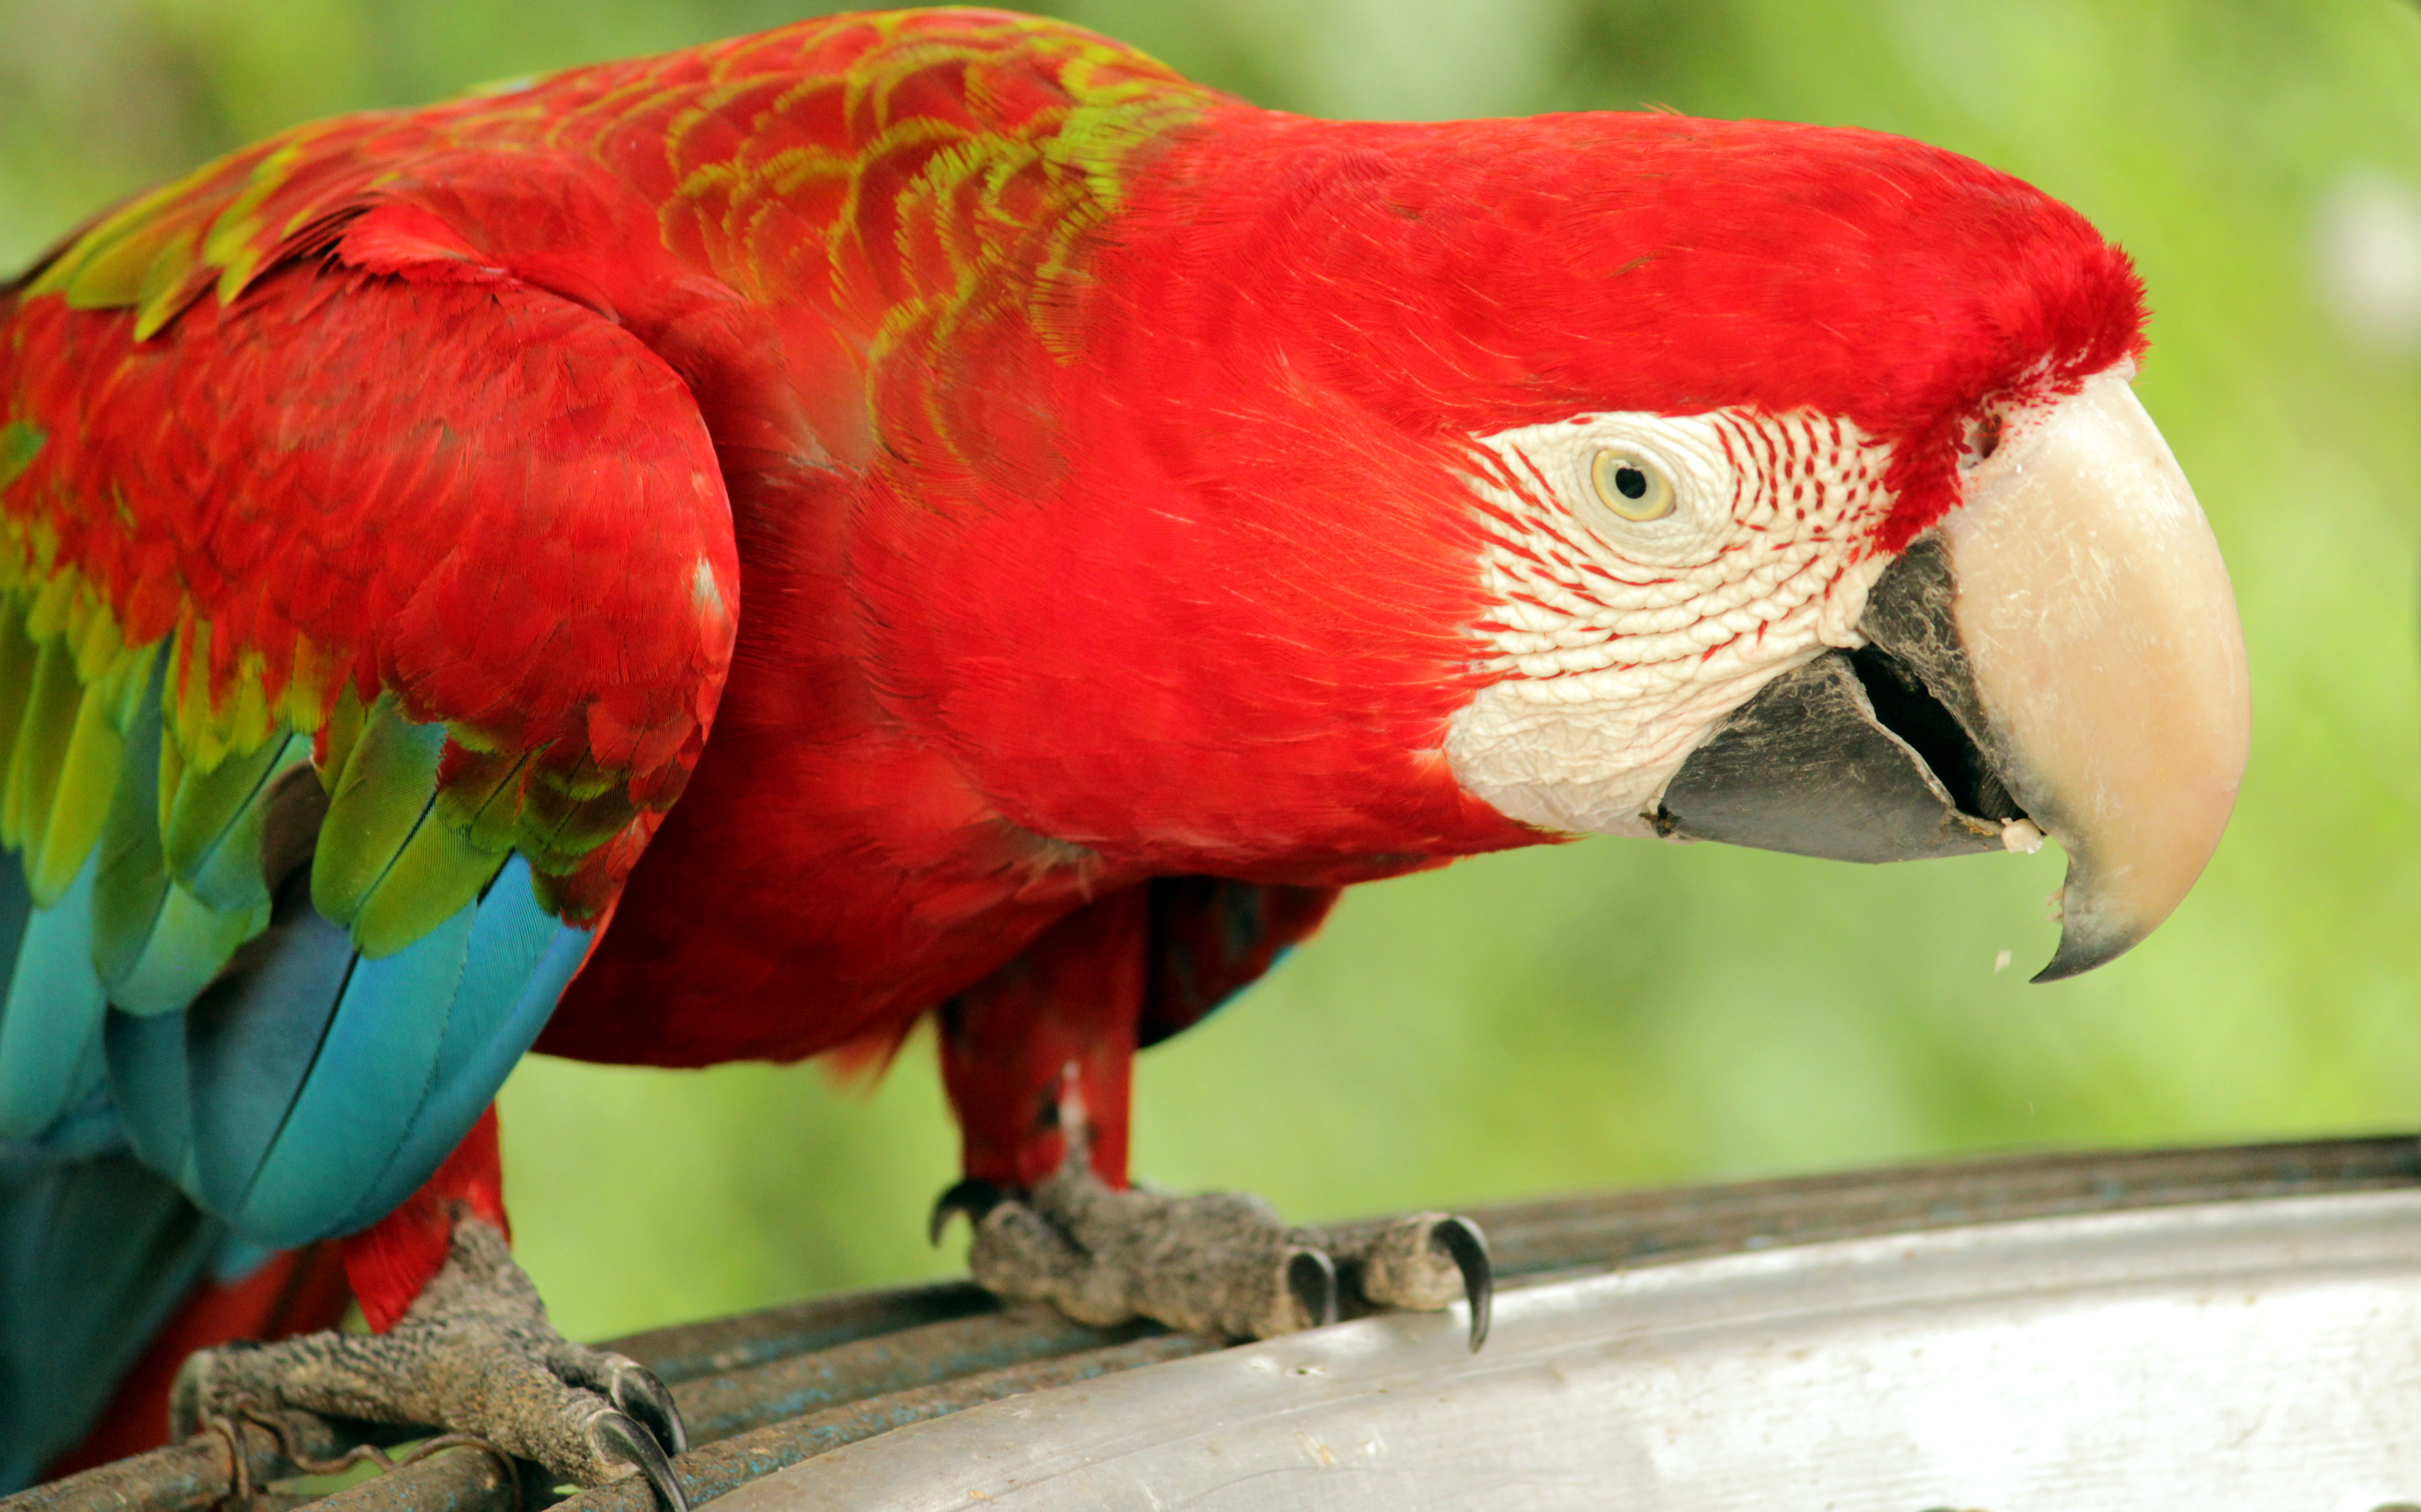 File:Scarlet Macaw Eating.jpg - Wikimedia Commons